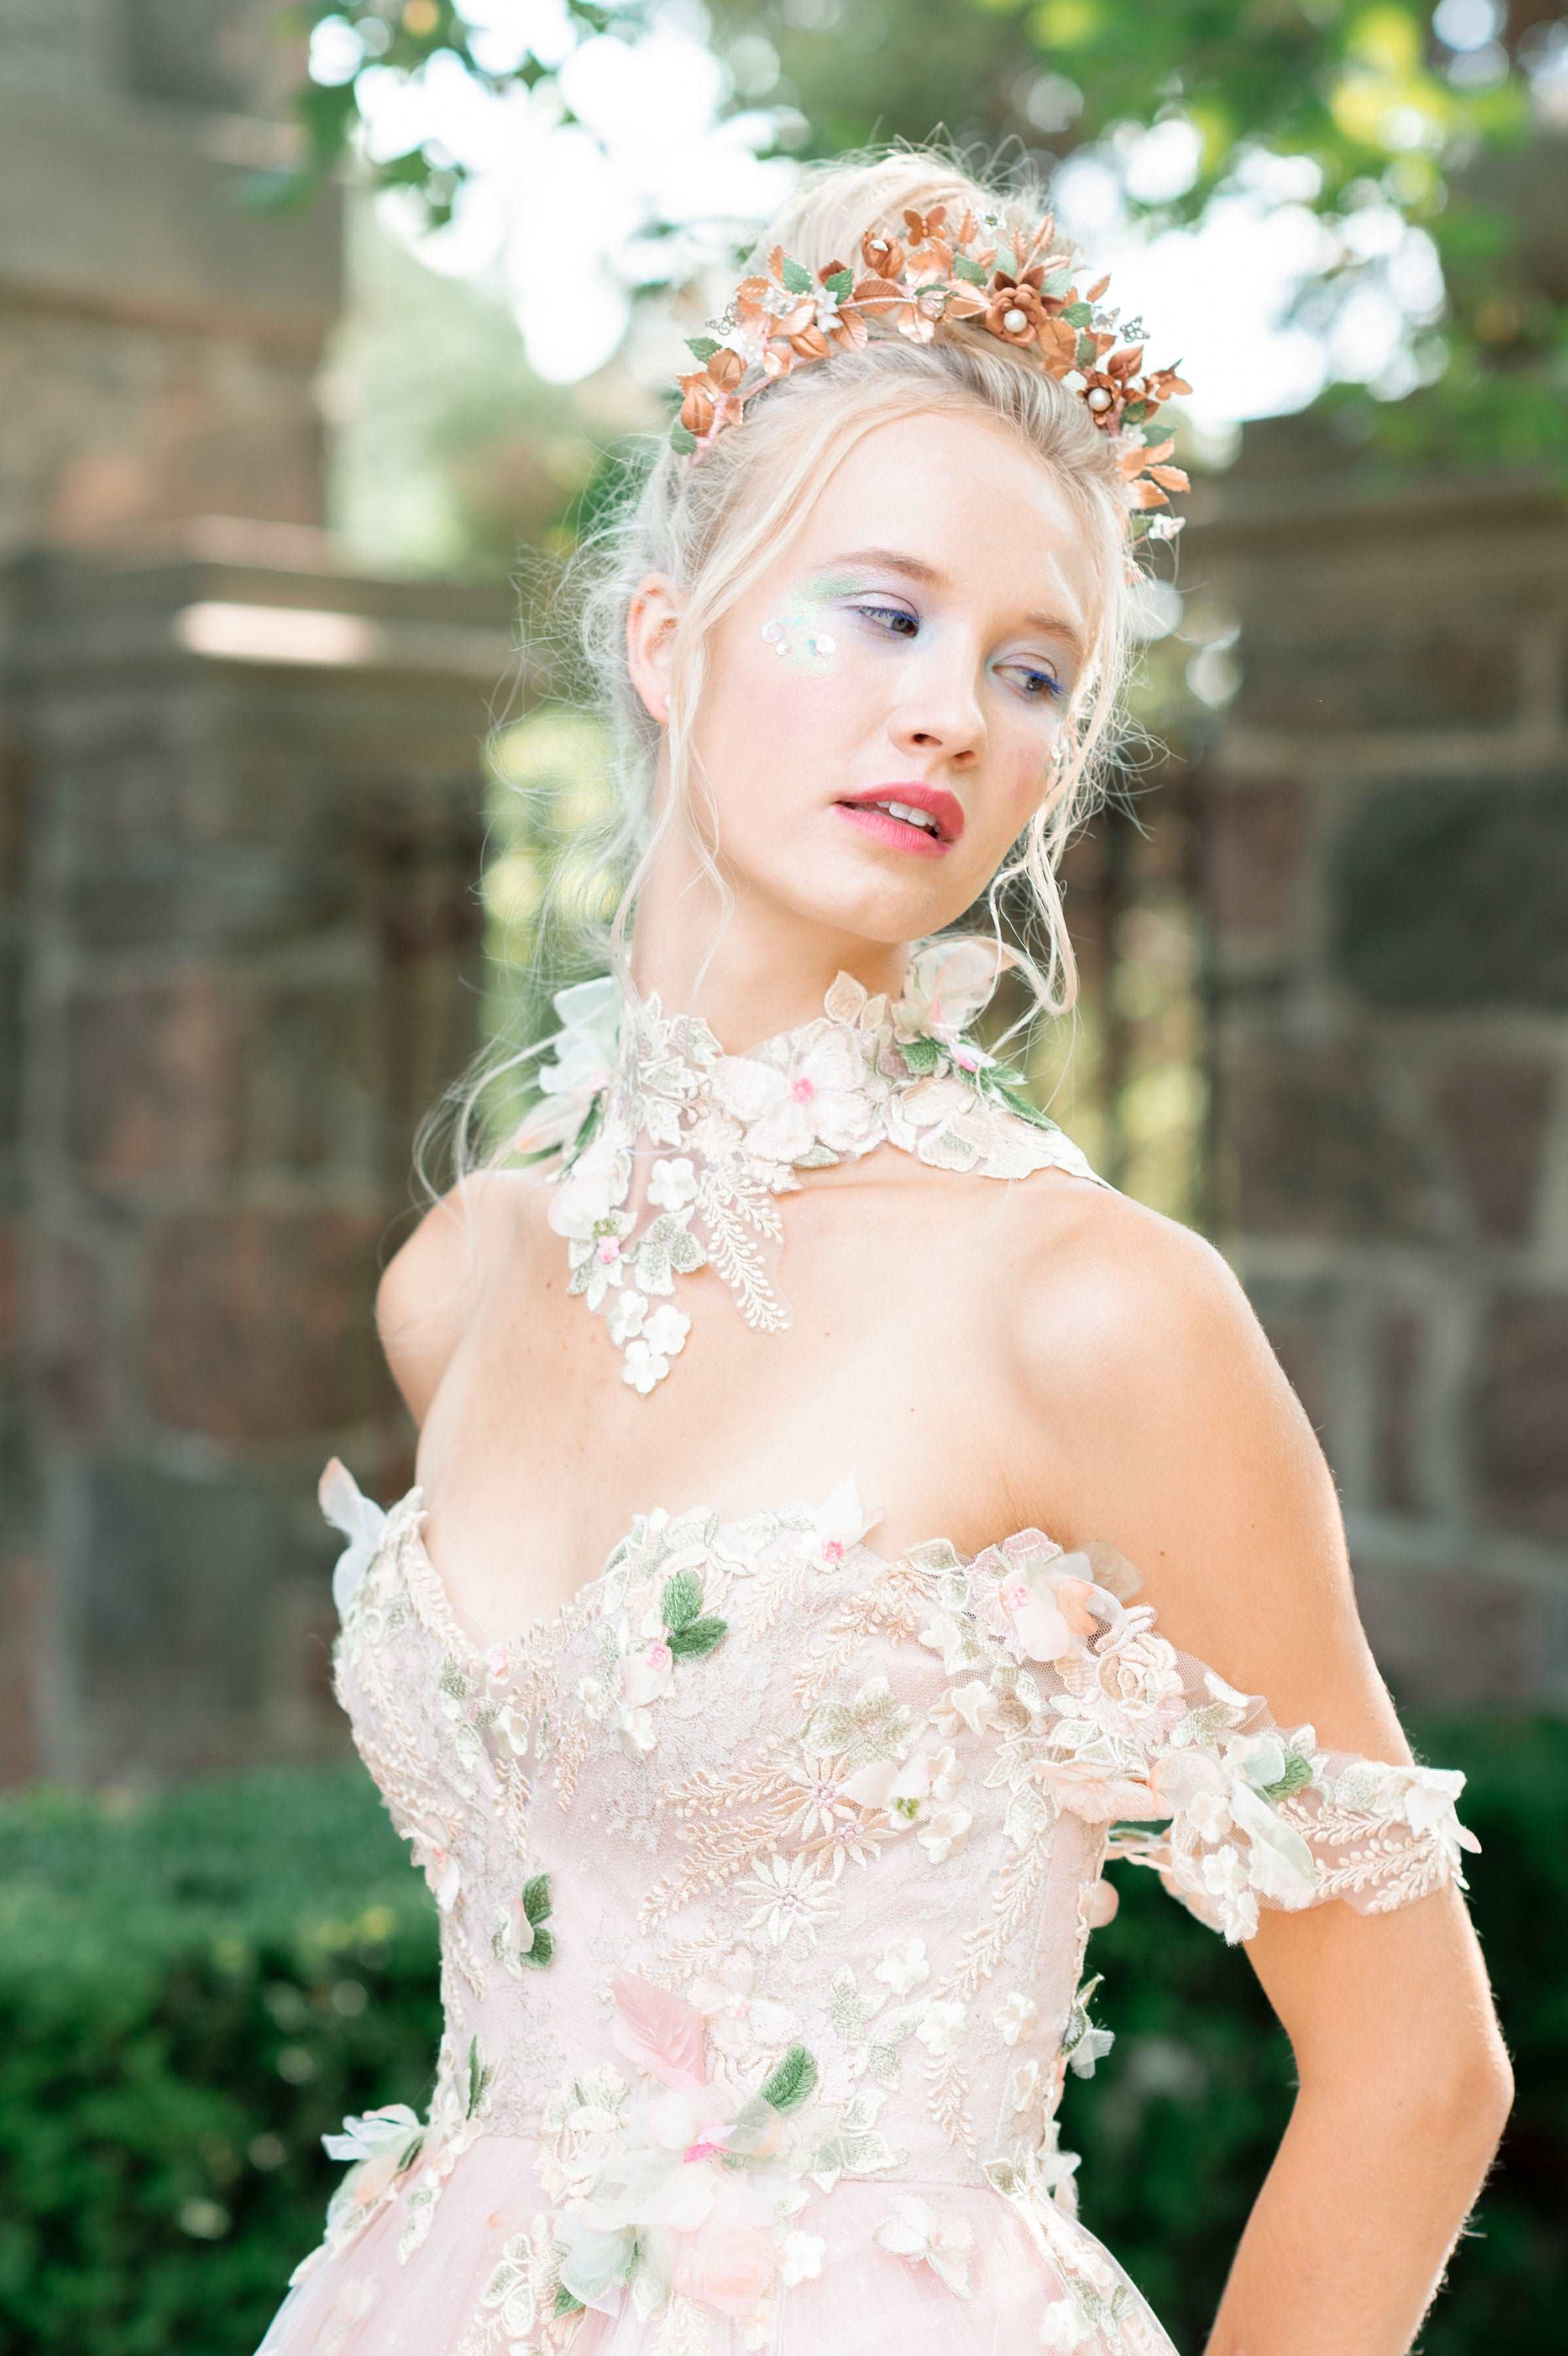 Princess Wedding Dresses: 18 Styles For FairyTale Celebration  Wedding  dresses princess ballgown, Princess wedding dresses, Wedding dresses  romantic